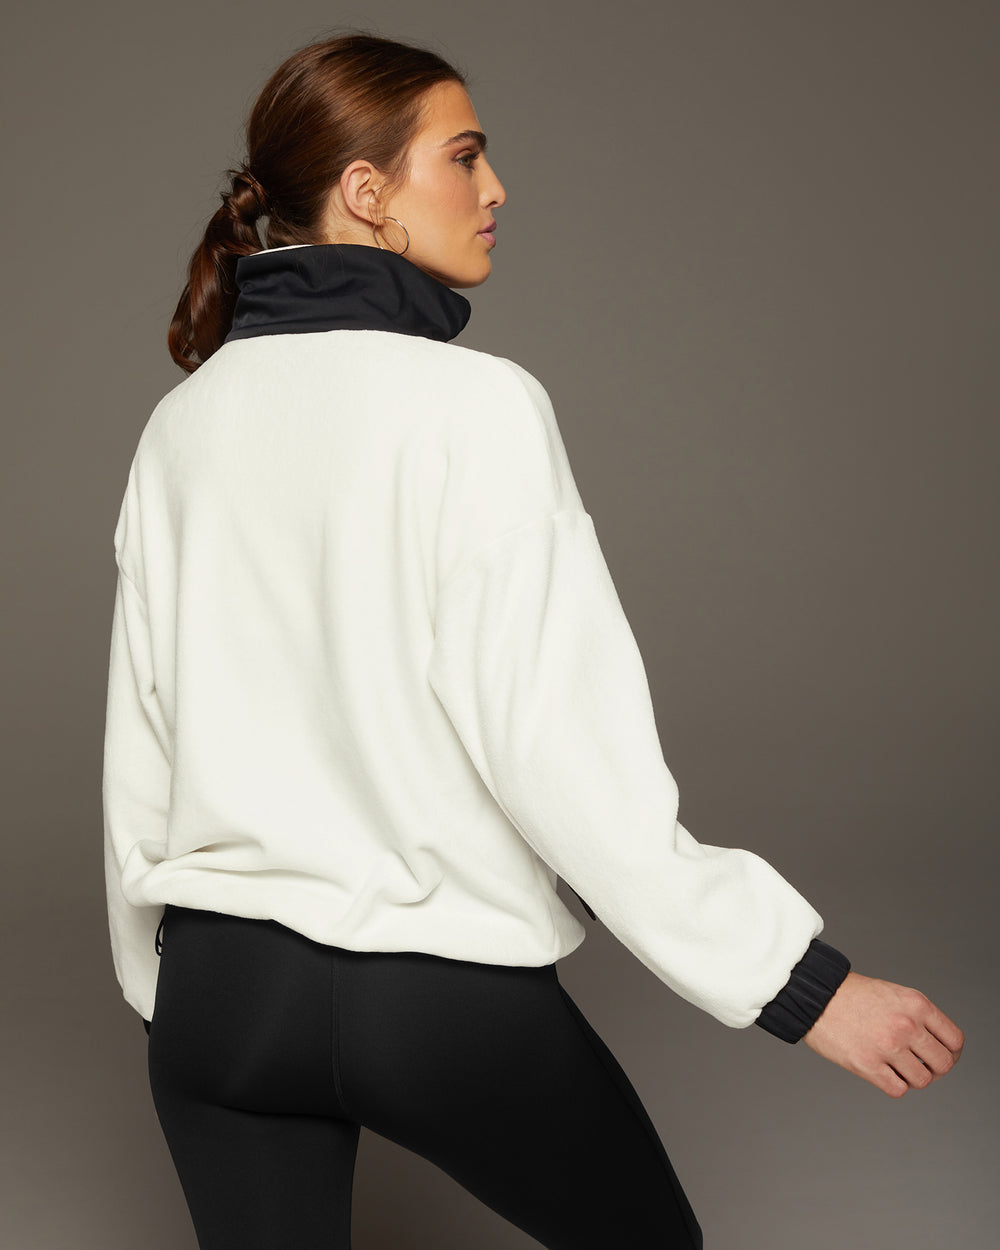 Shop the MICHI Powder Jacket | Women\'s Designer Activewear | Jacken